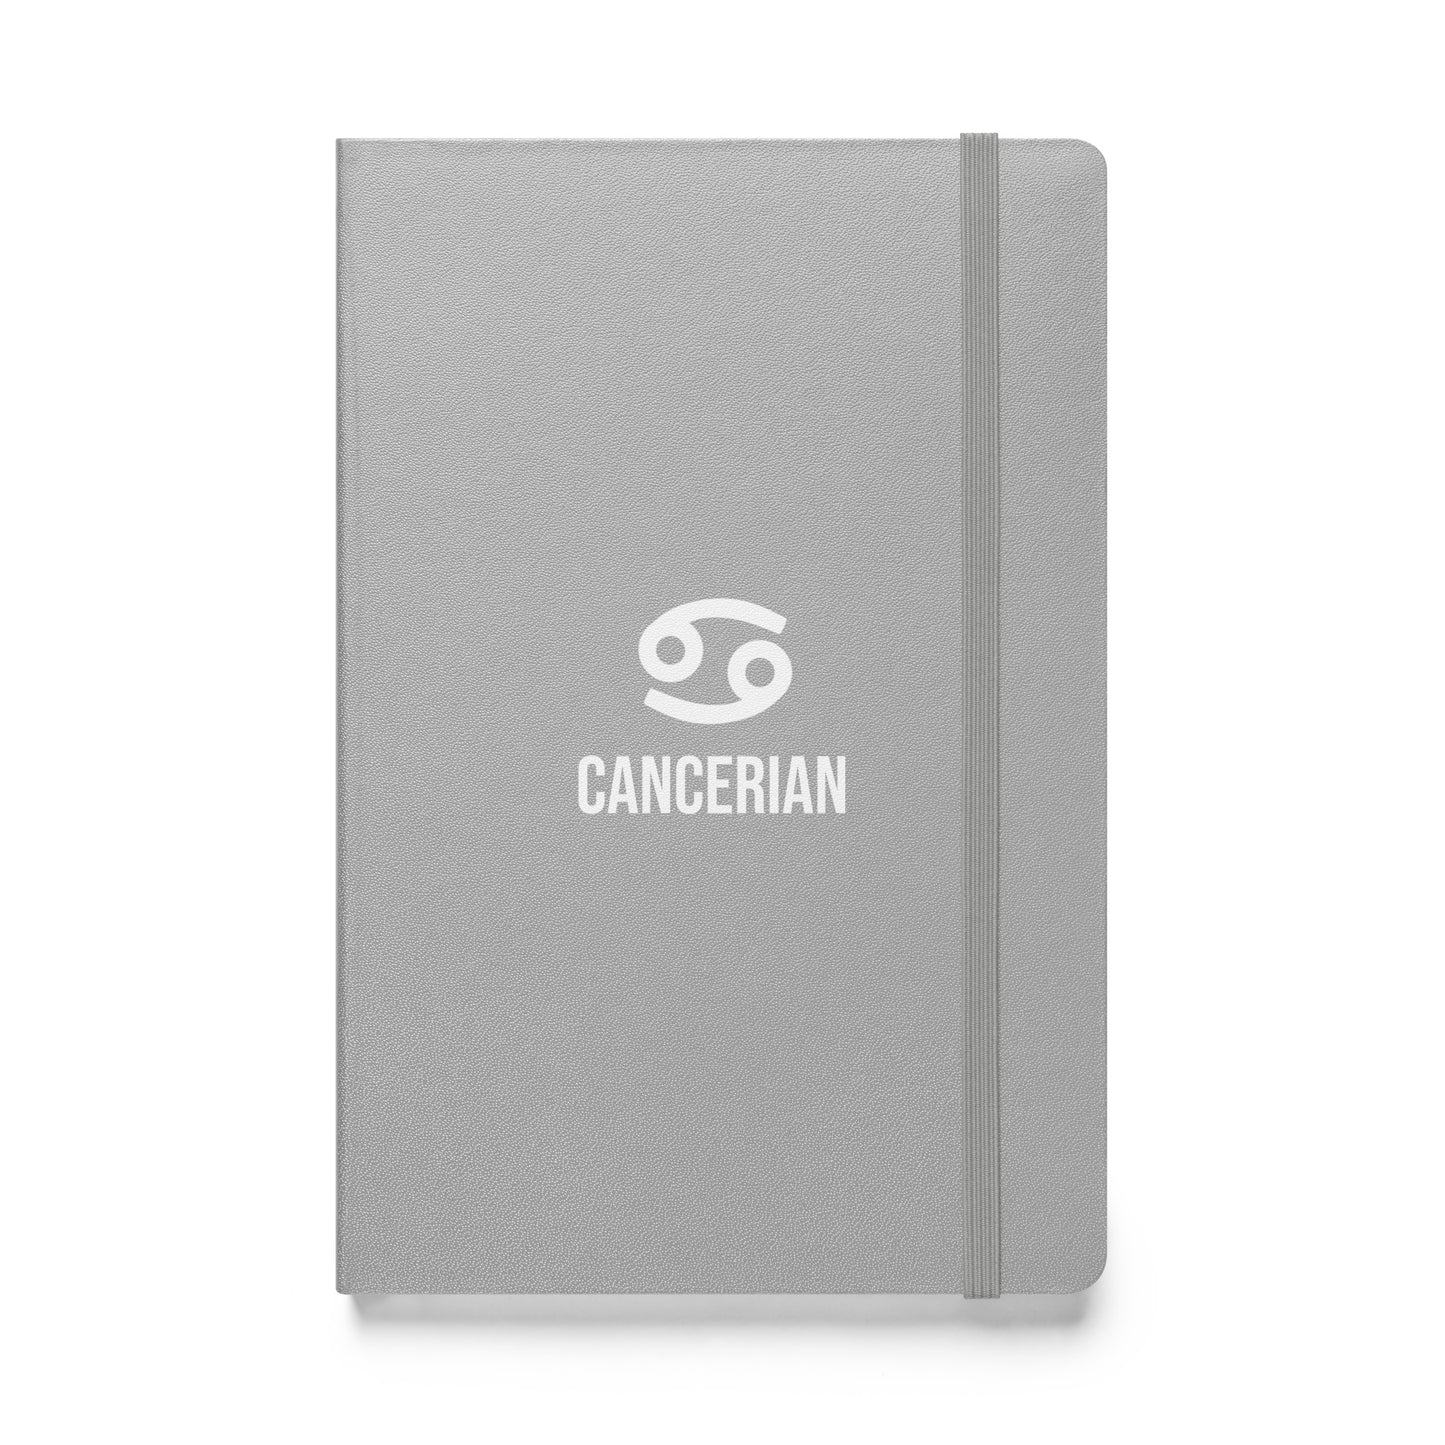 Cancerian Hardcover Notebook